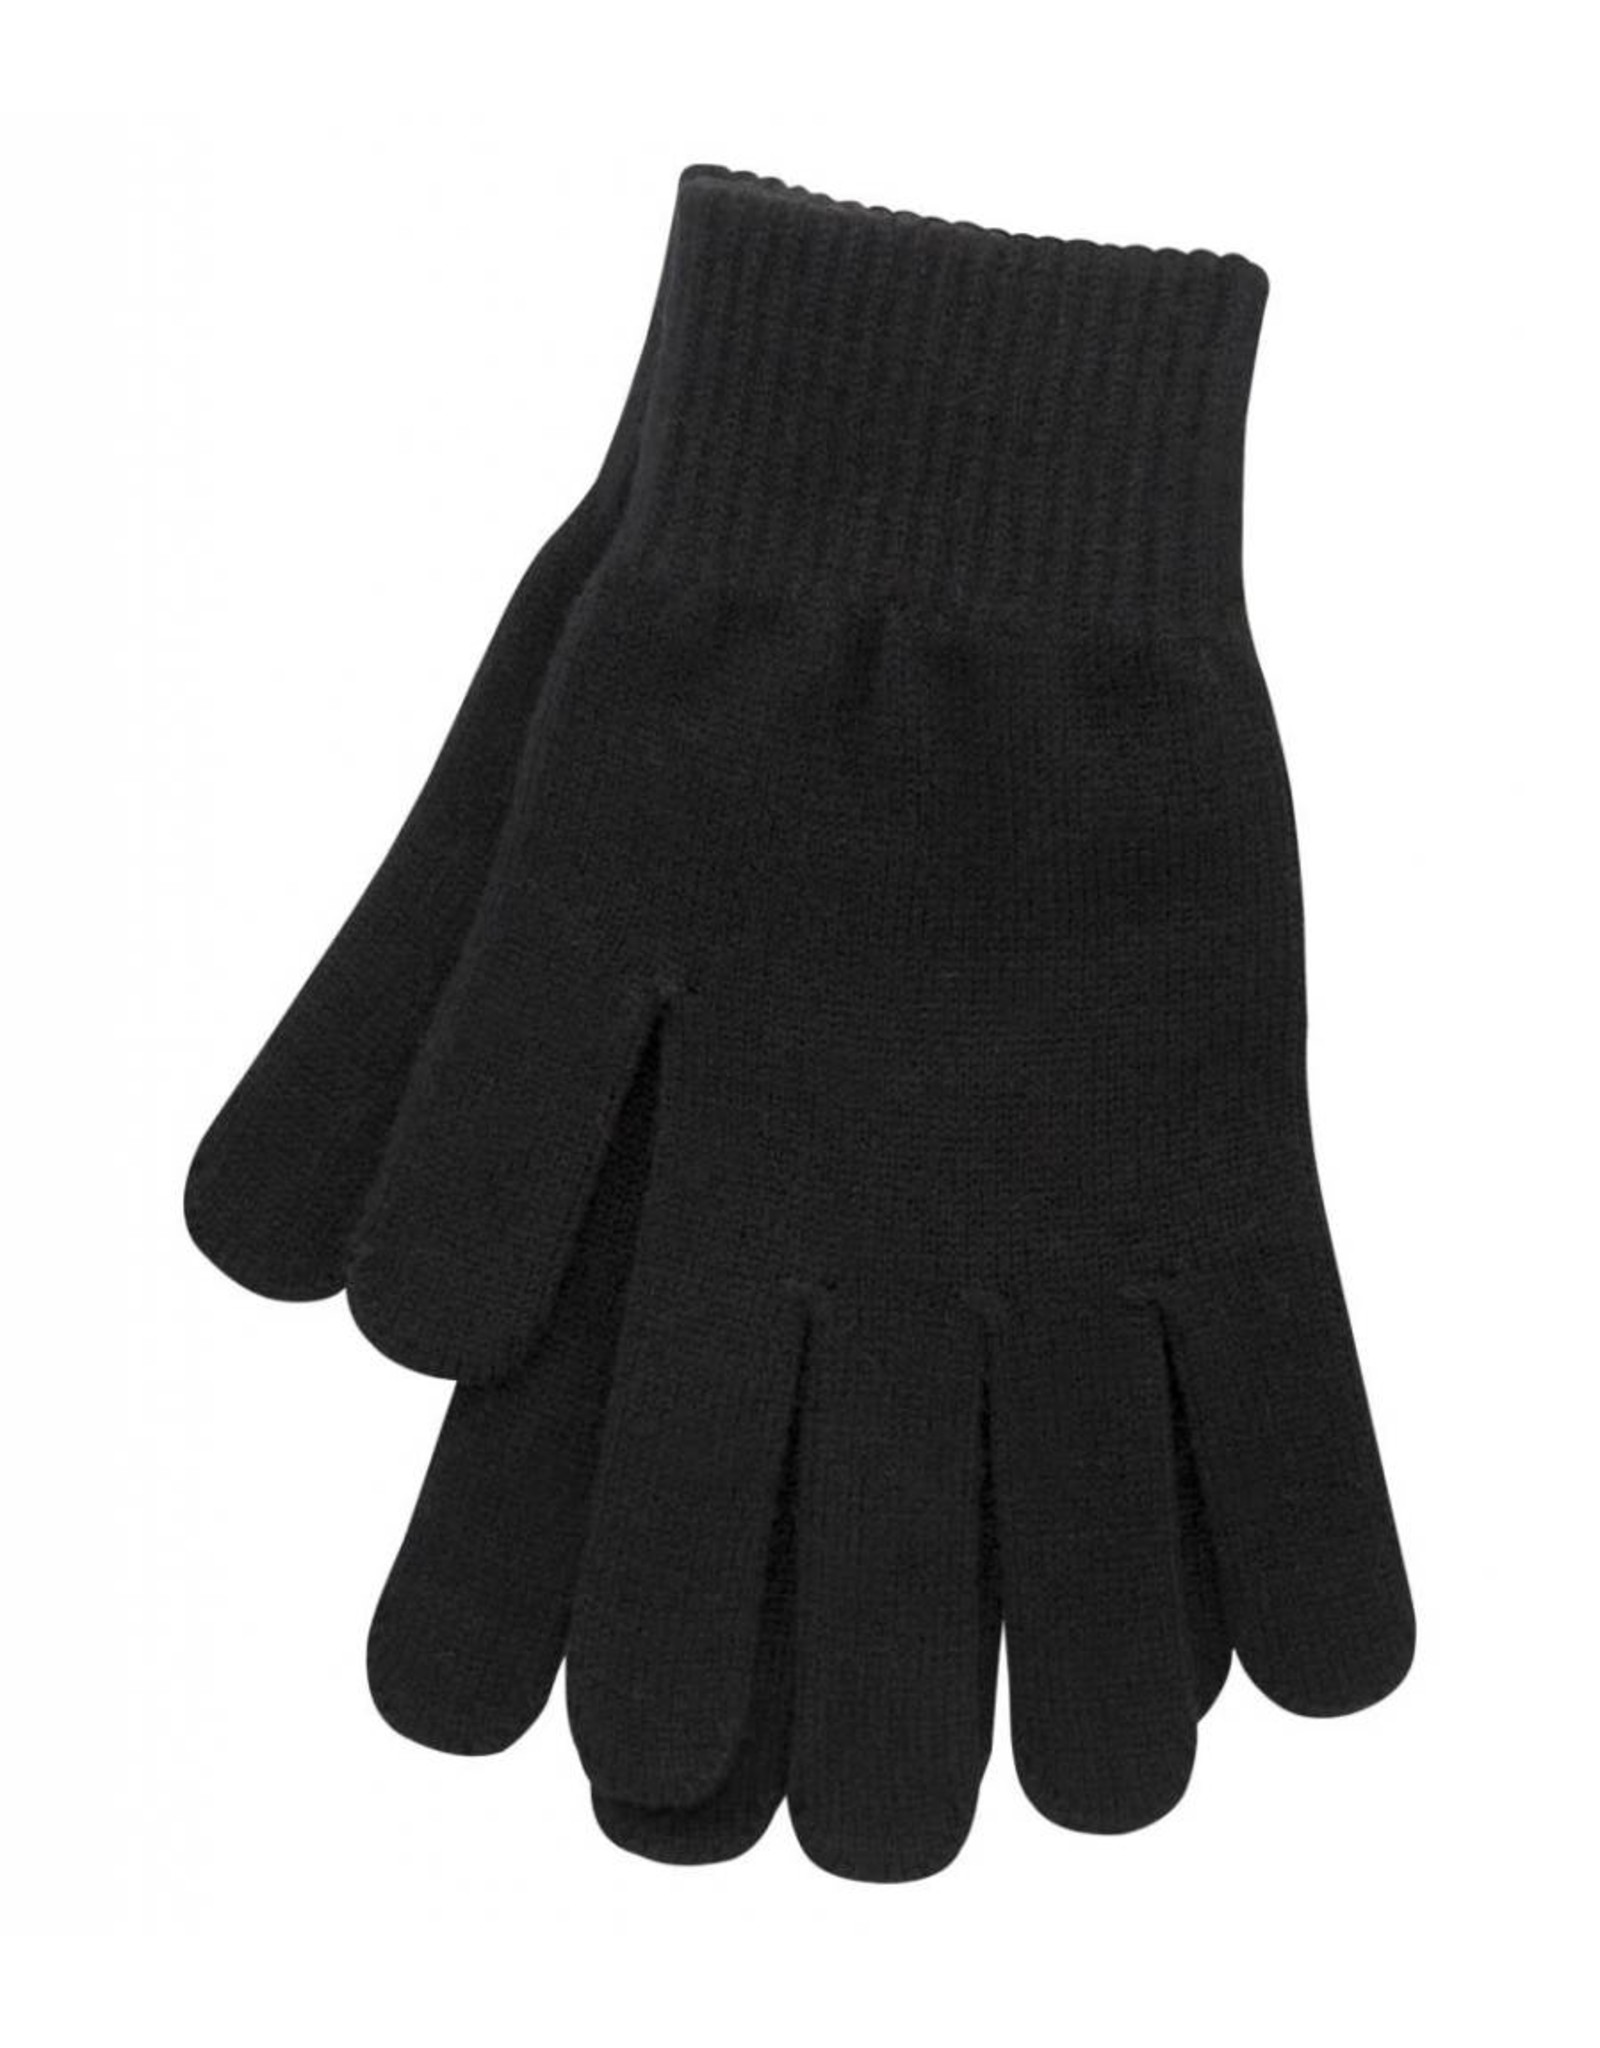 ATC Touchscreen Friendly Gloves